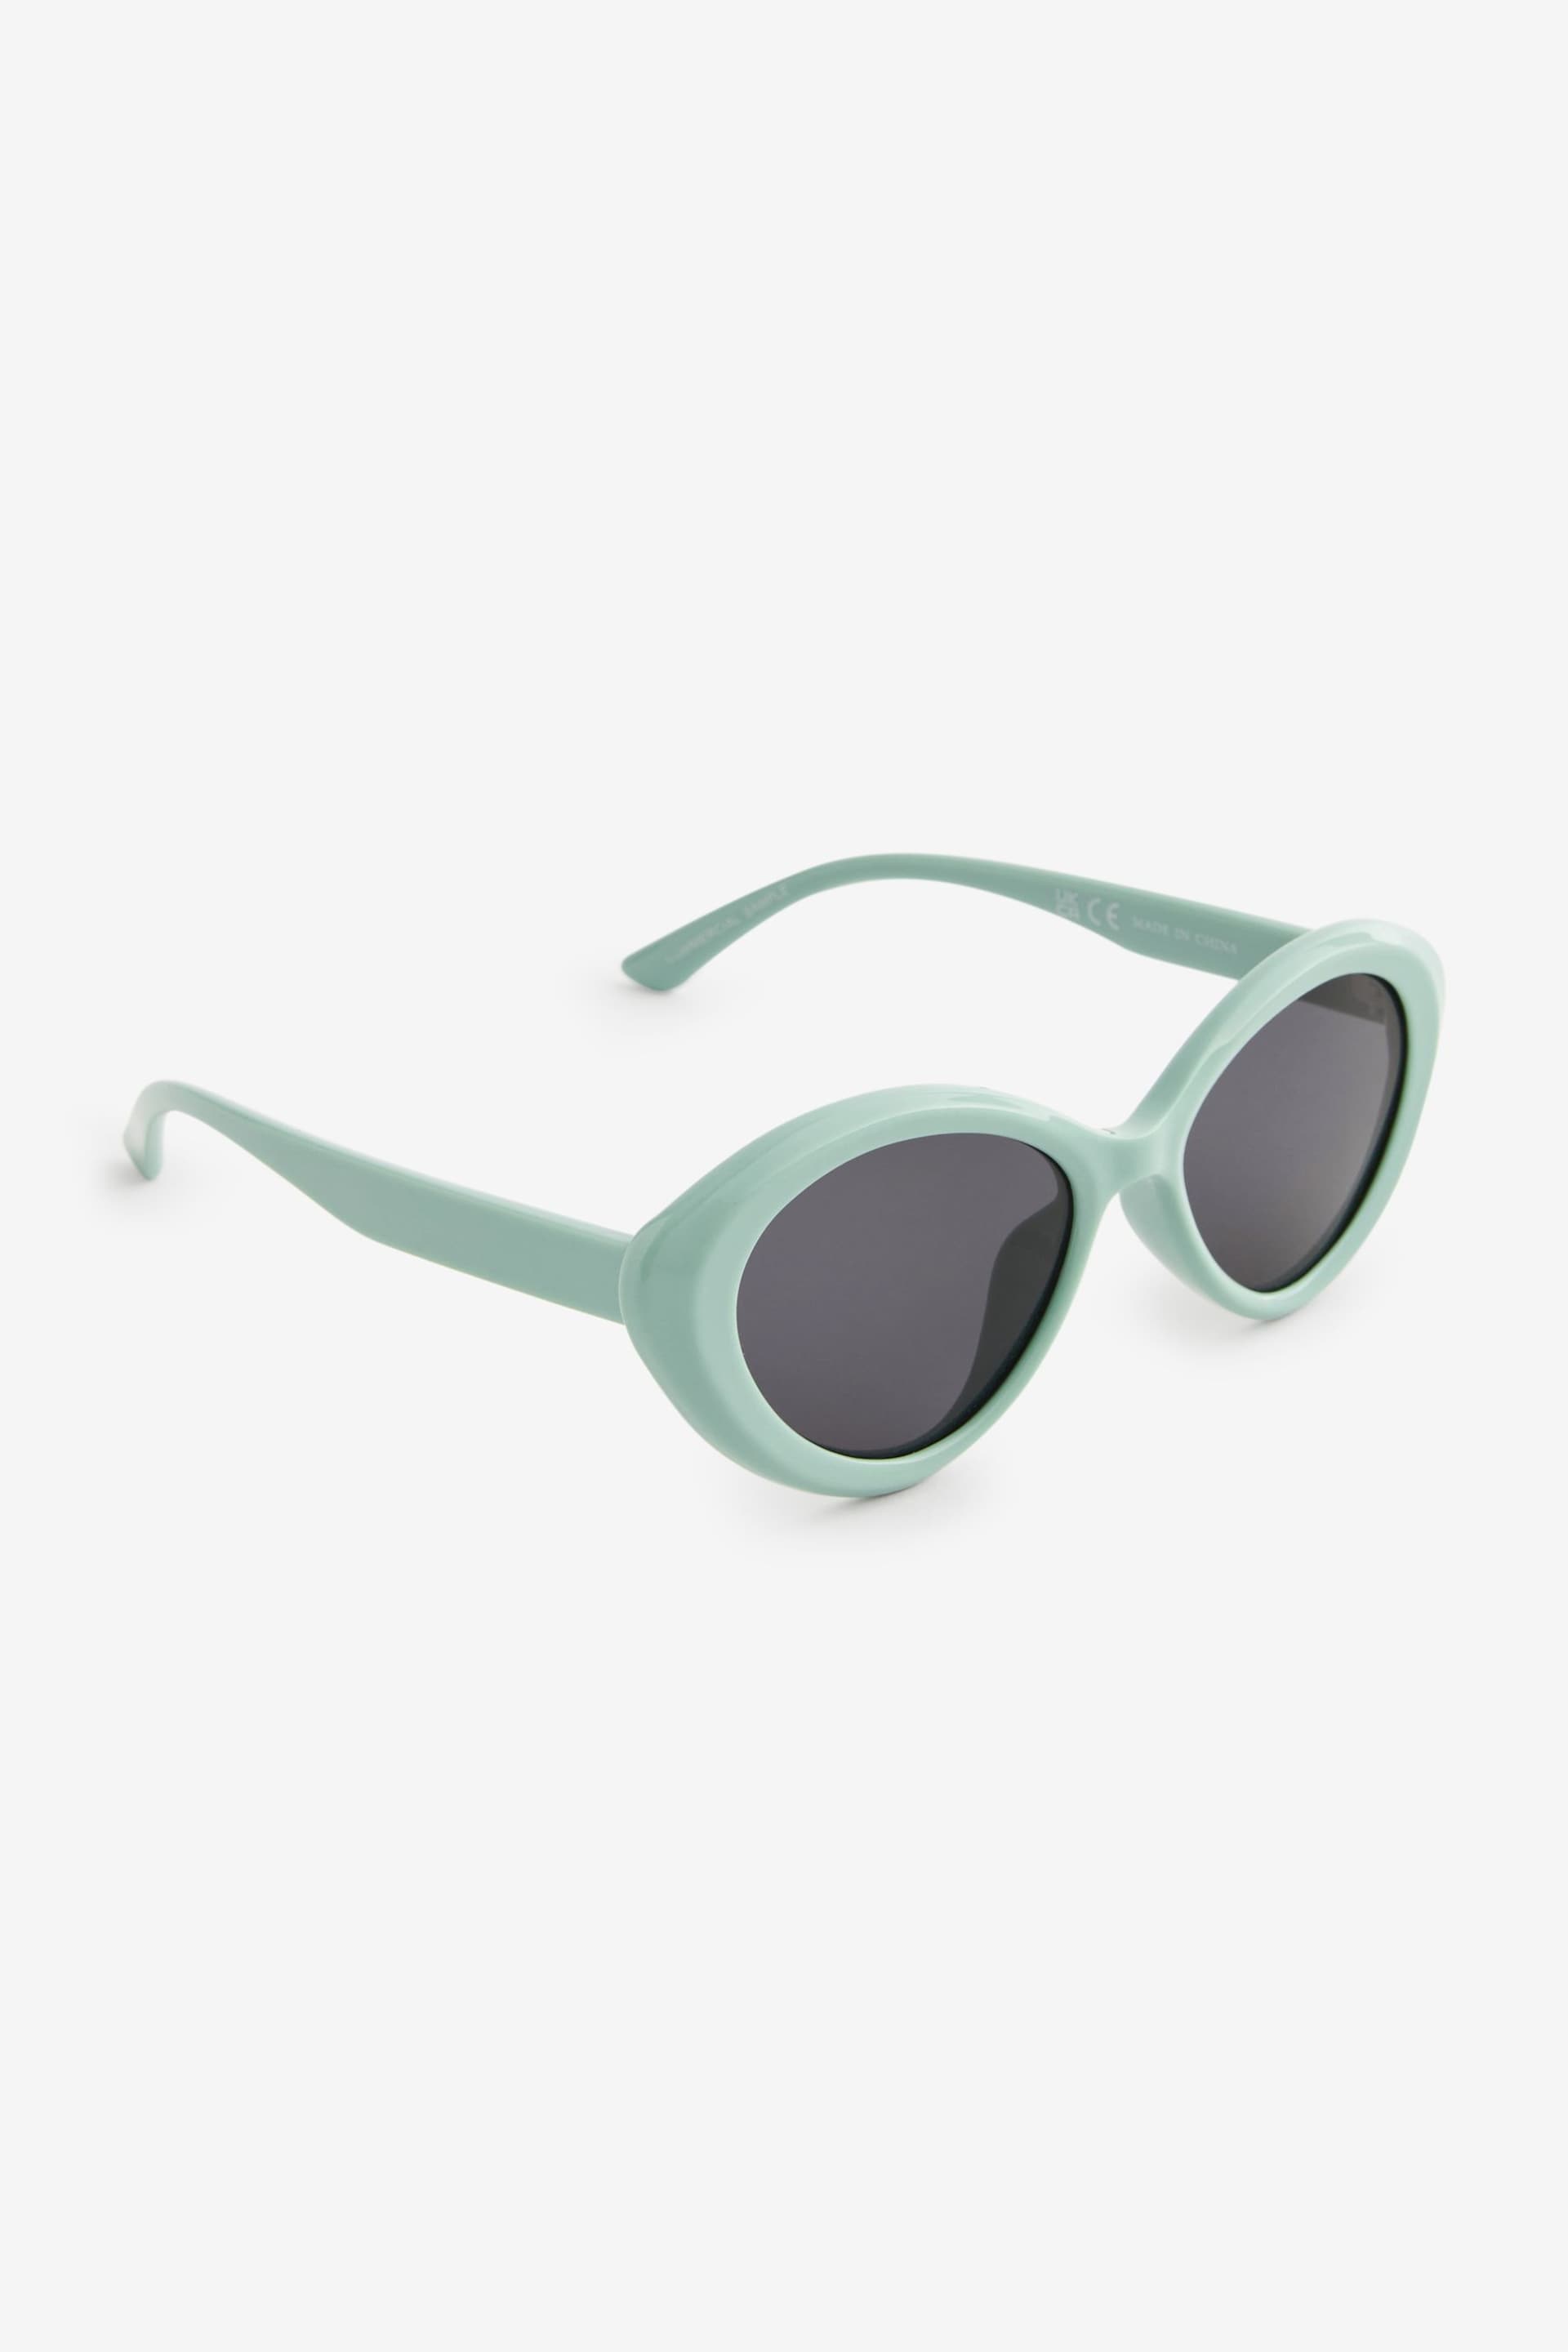 Mint Green Polarized Soft Cateye Sunglasses - Image 3 of 6